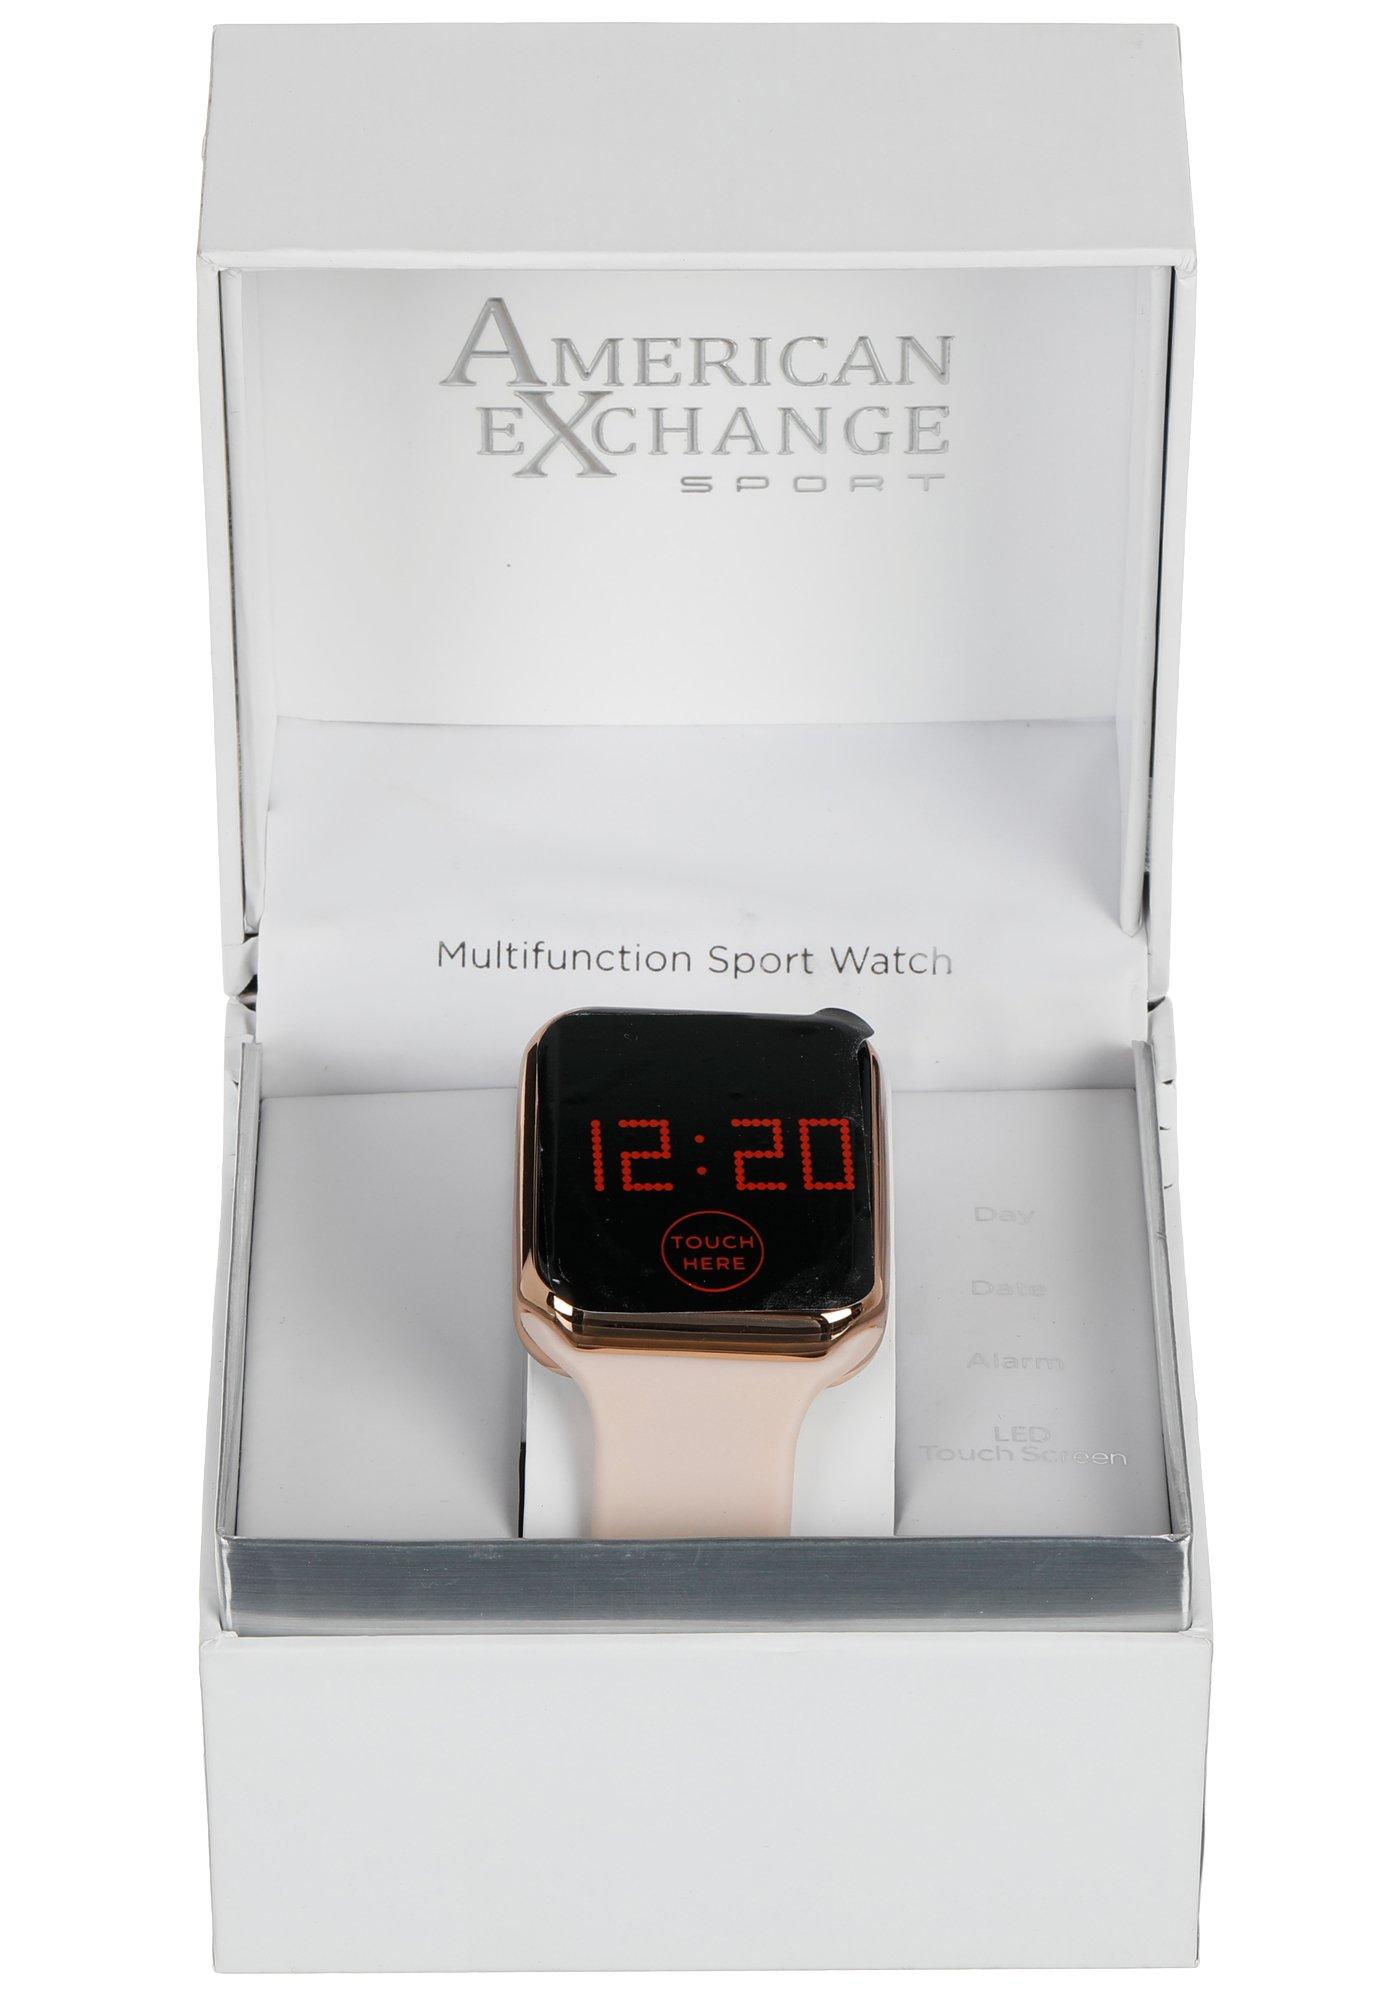 american exchange multi function sport watch